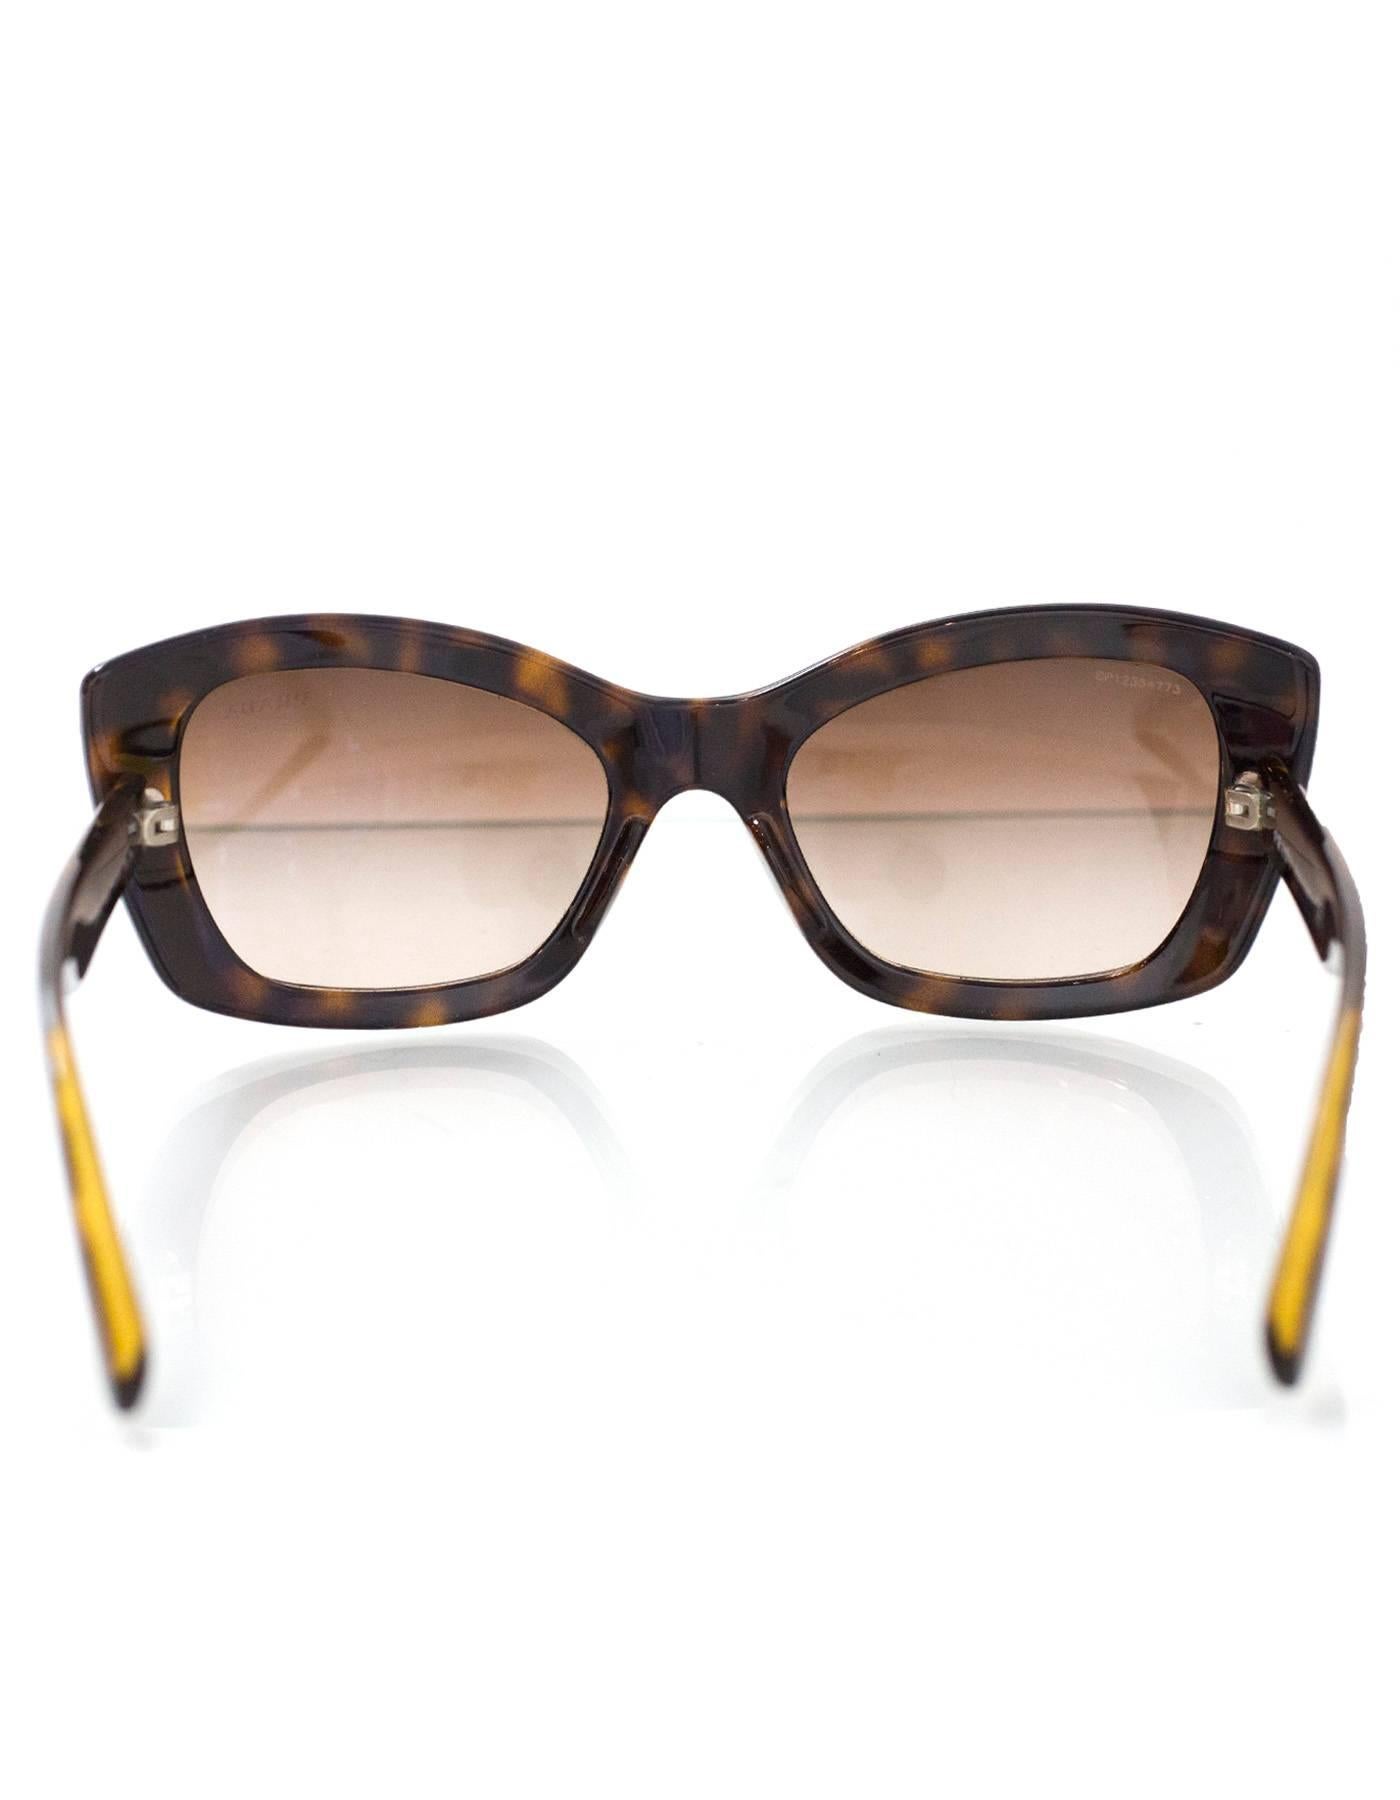 Women's Prada Brown Tortoise Sunglasses with Case